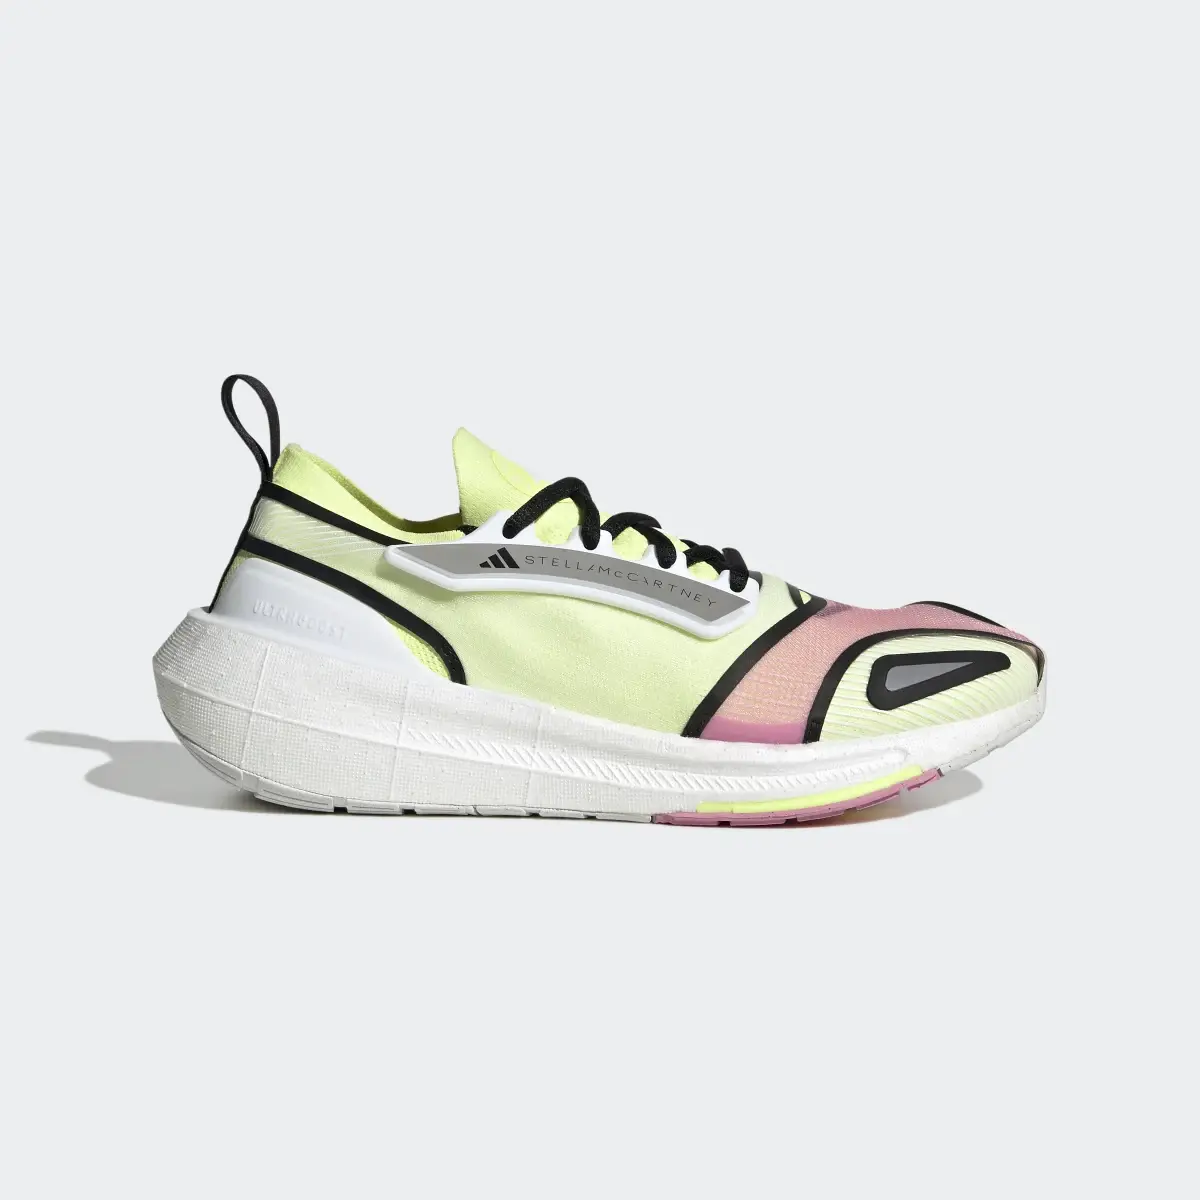 Adidas by Stella McCartney Ultraboost Light Shoes. 2